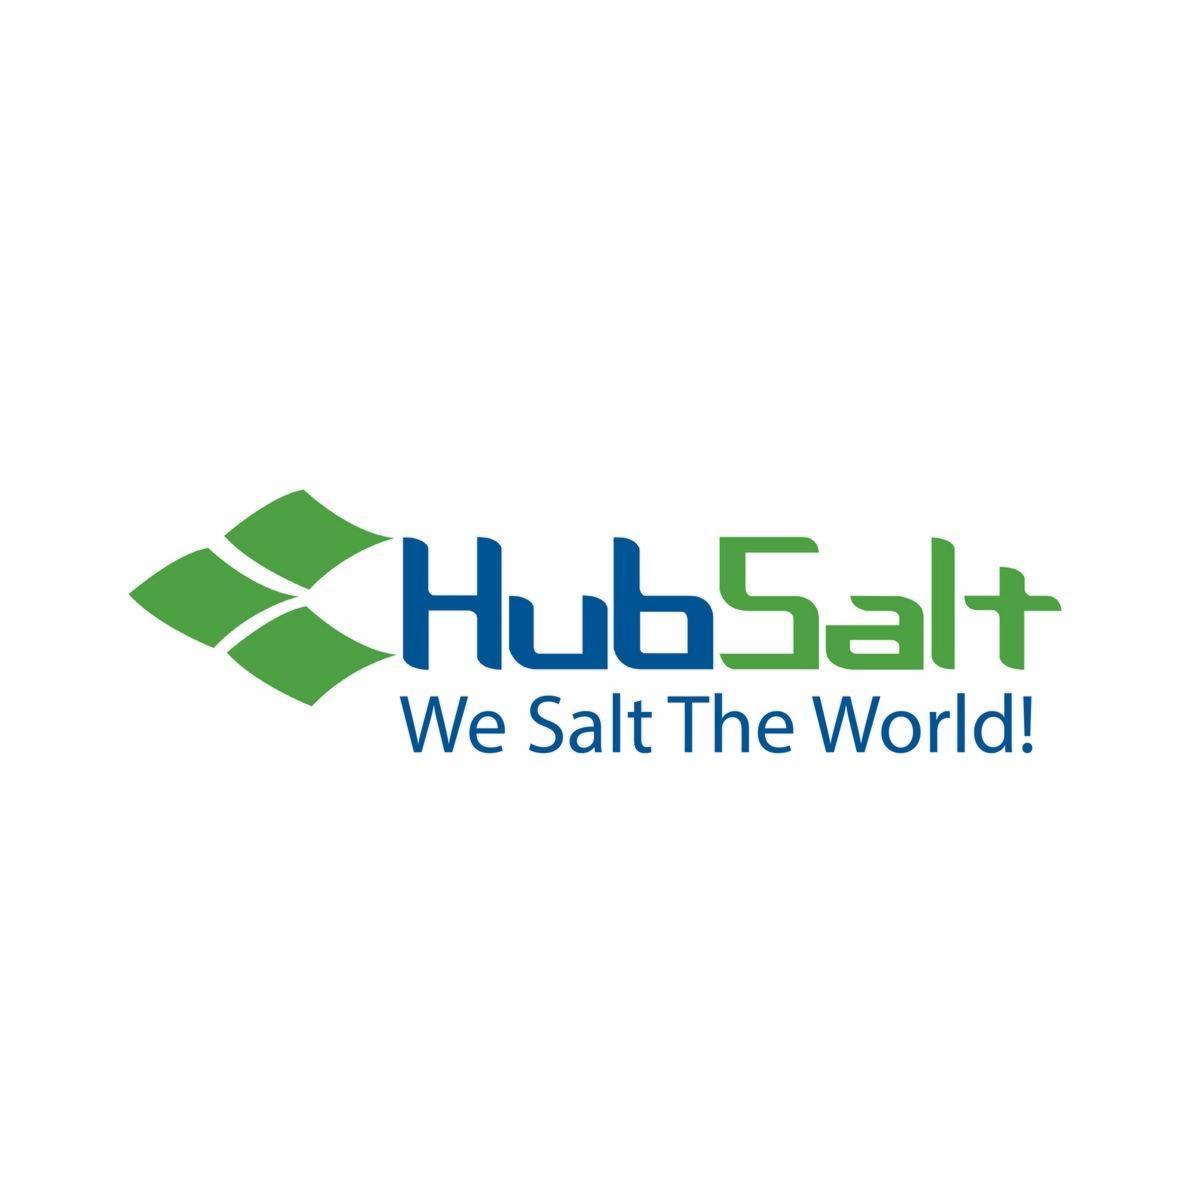 https://www.pakpositions.com/company/hub-pak-salt-refinery